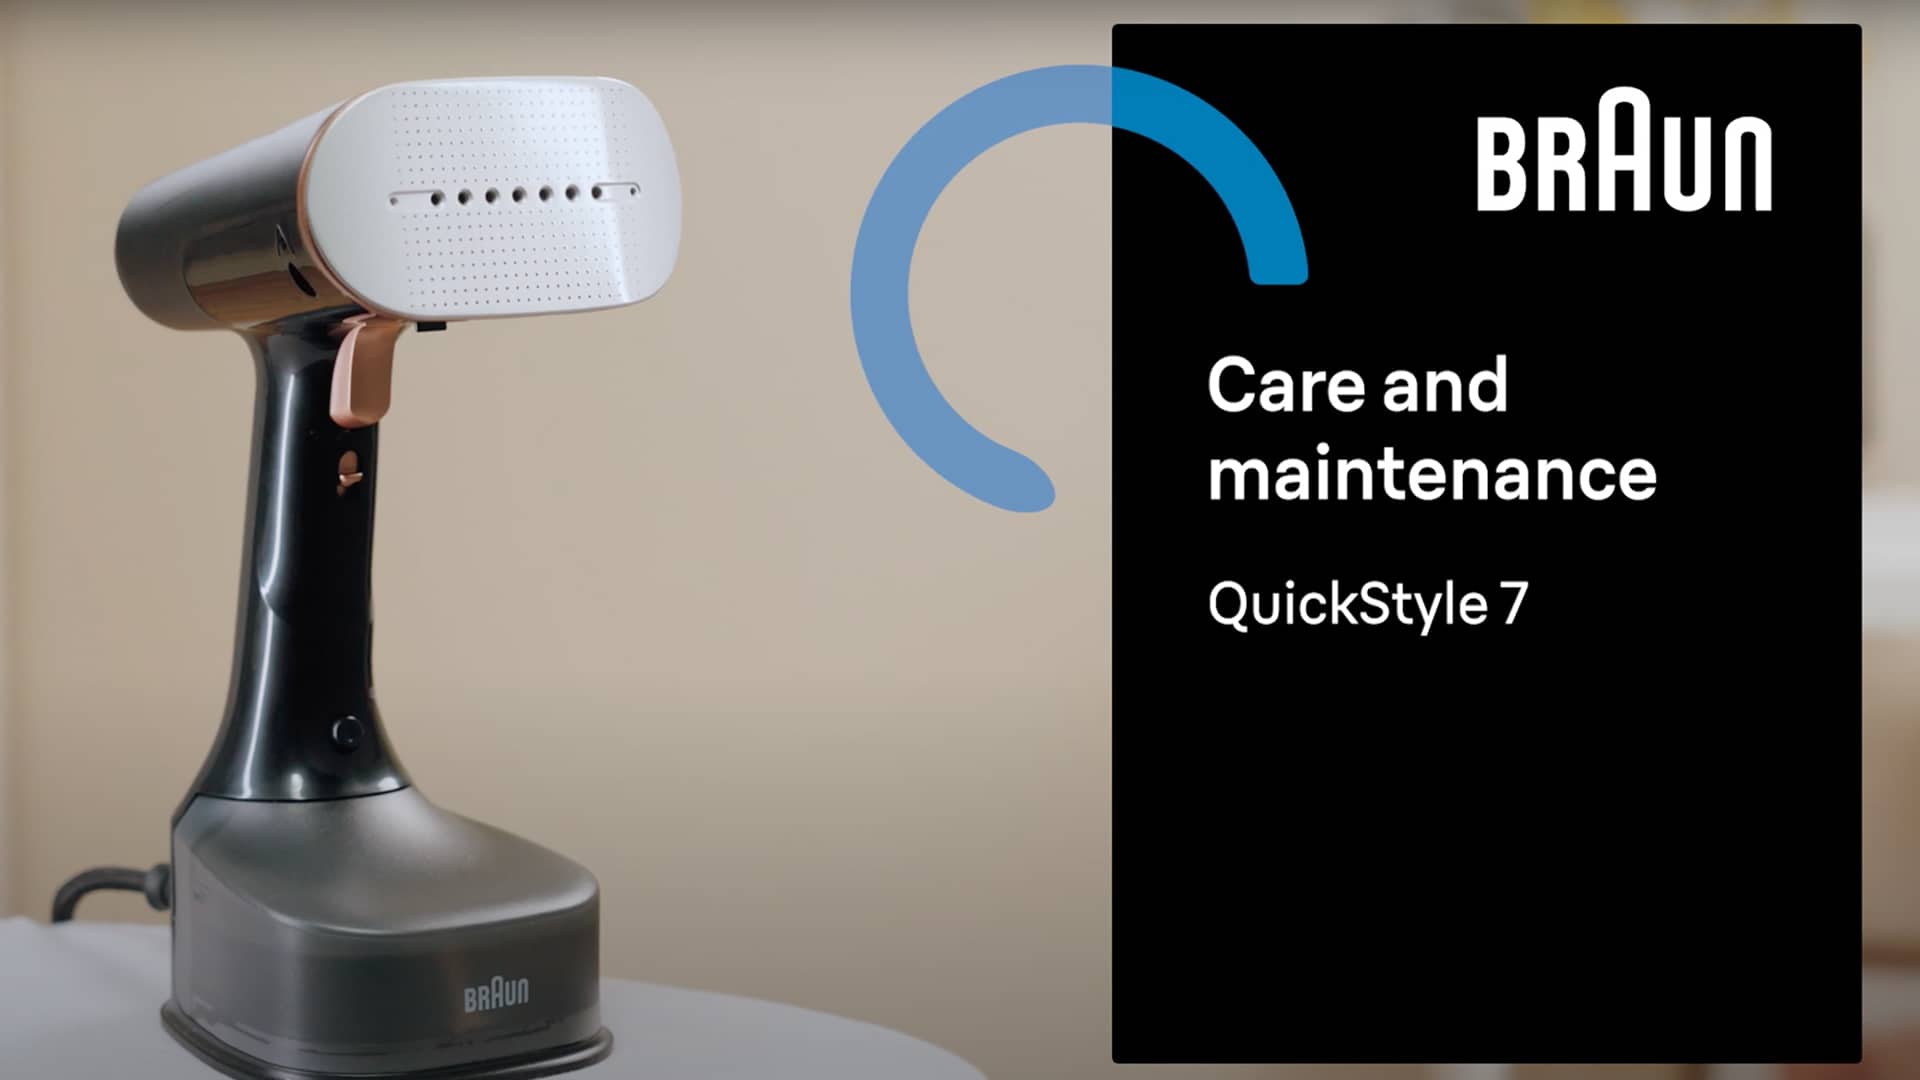 Braun QuickStyle 7 - Care and maintenance